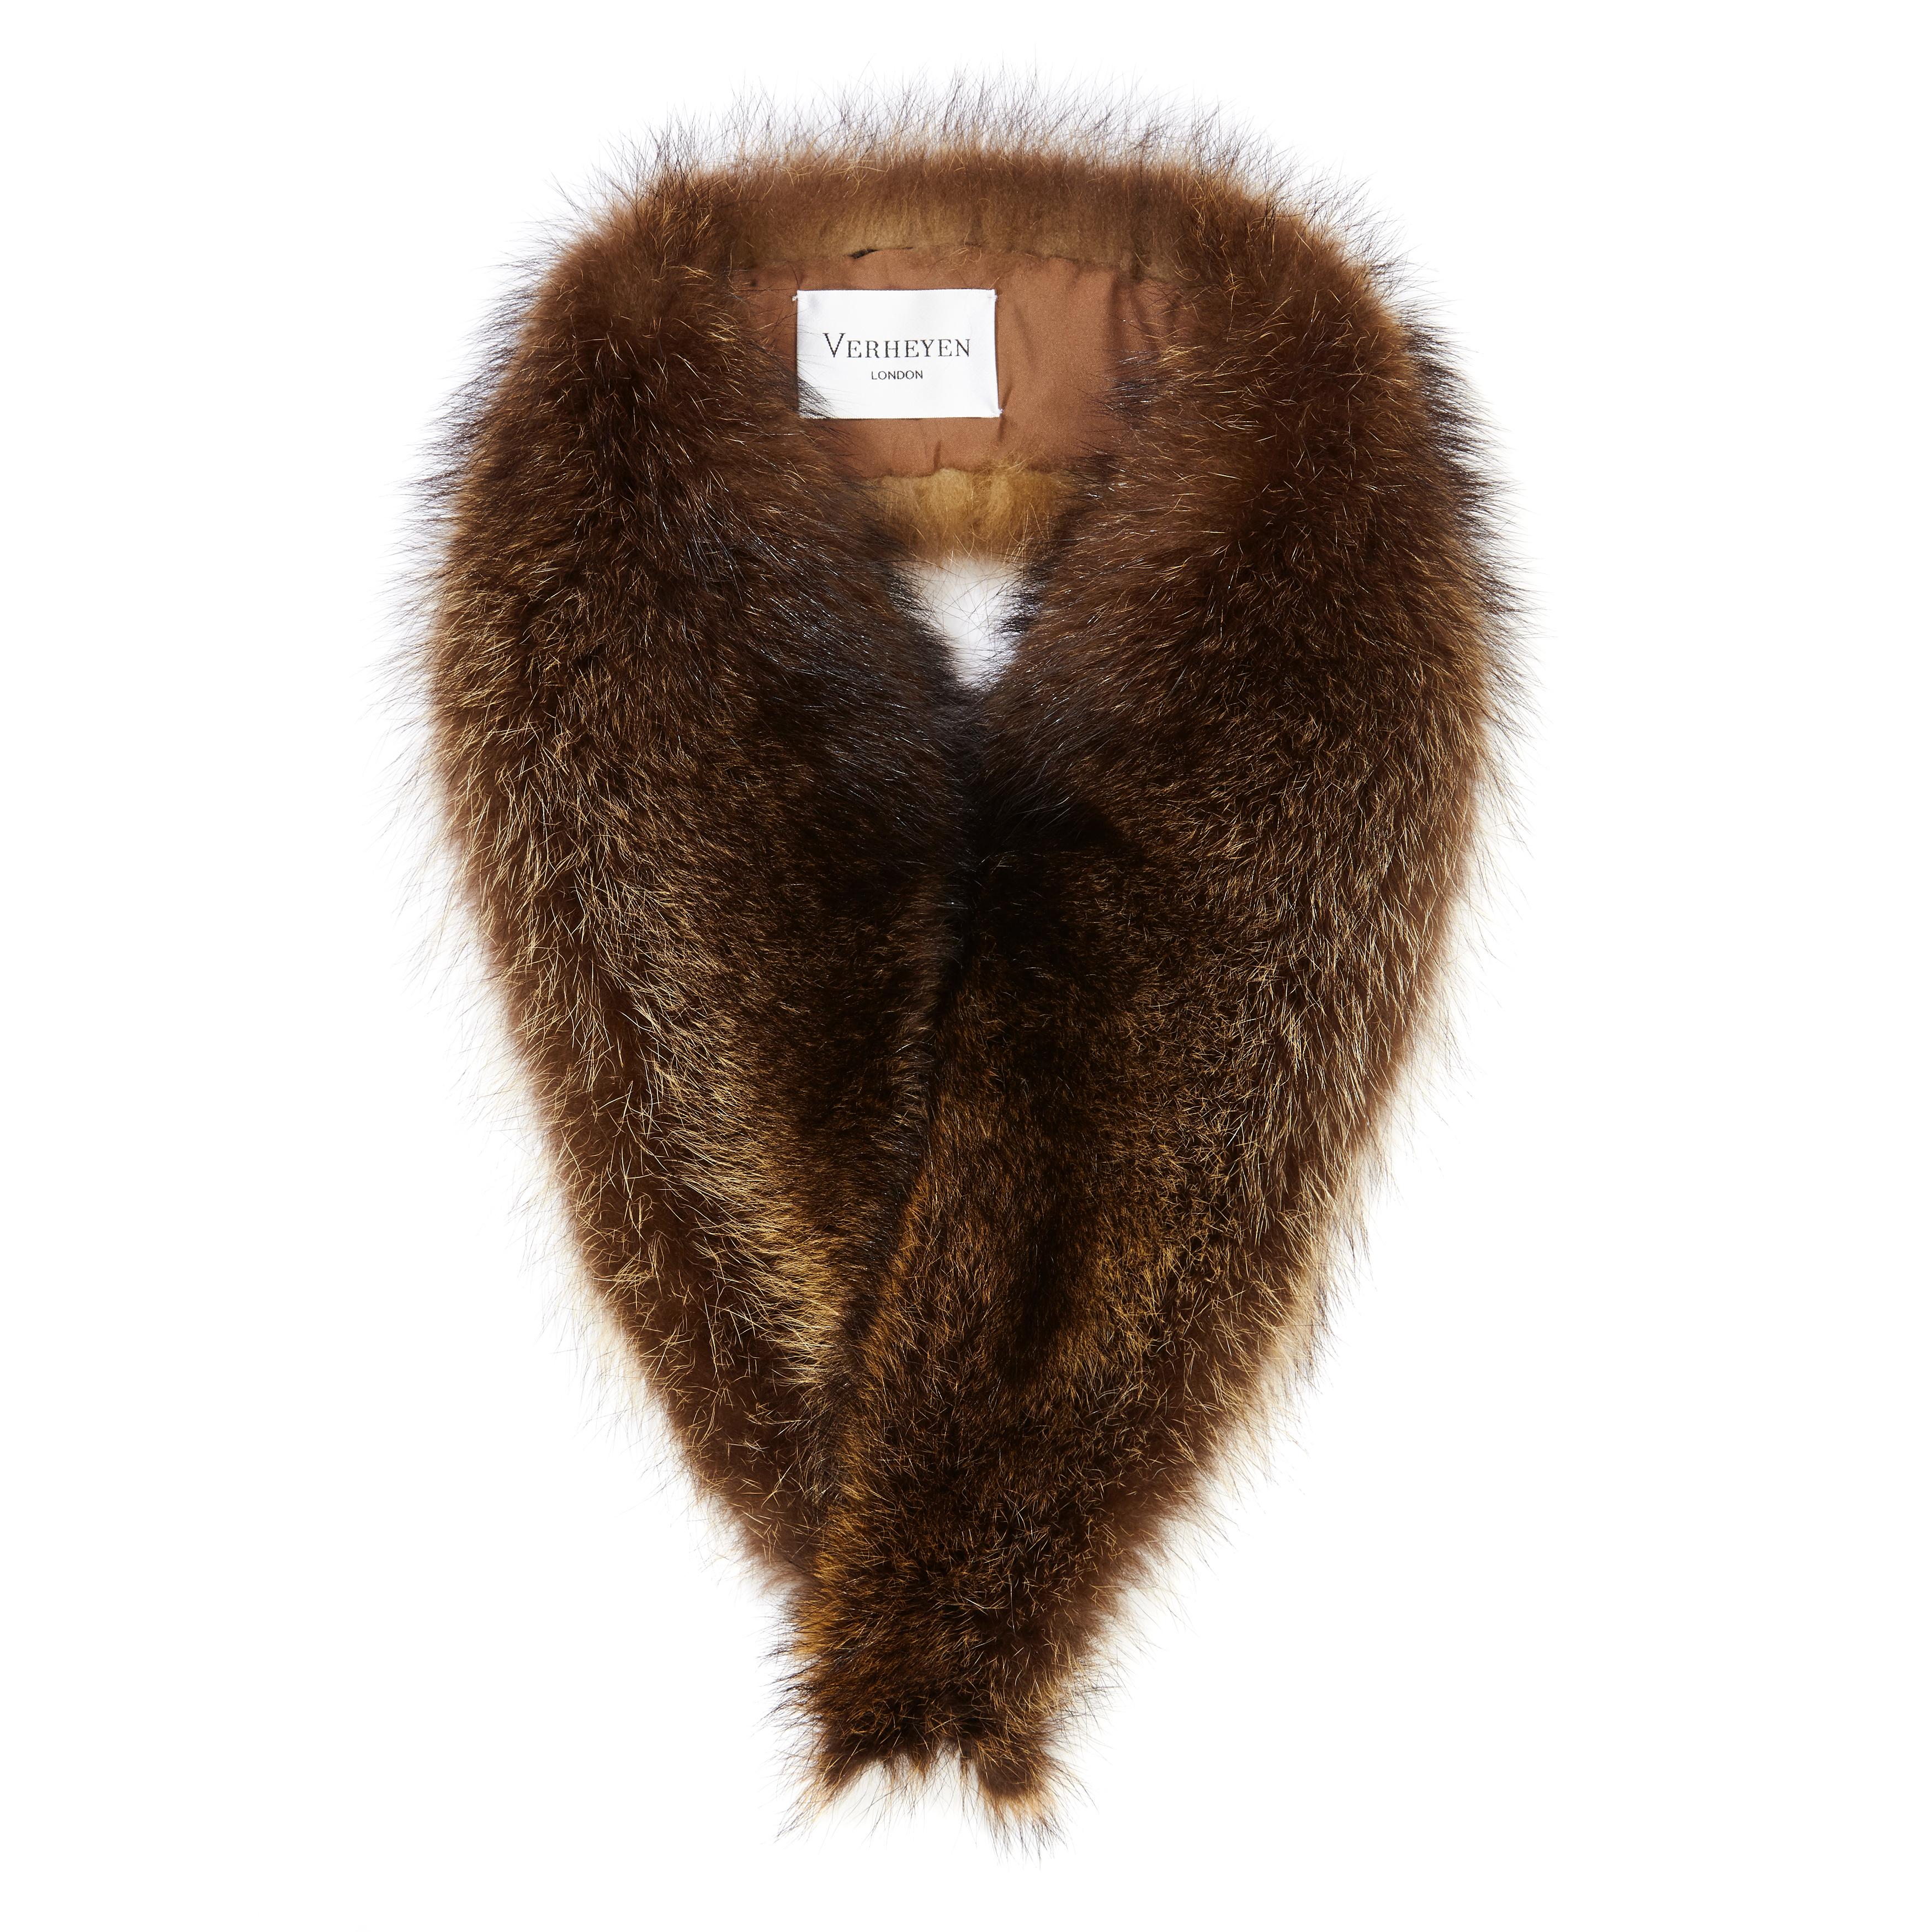 Brown Verheyen London Mens Detachable Fur Collar in Raccoon - Brand New